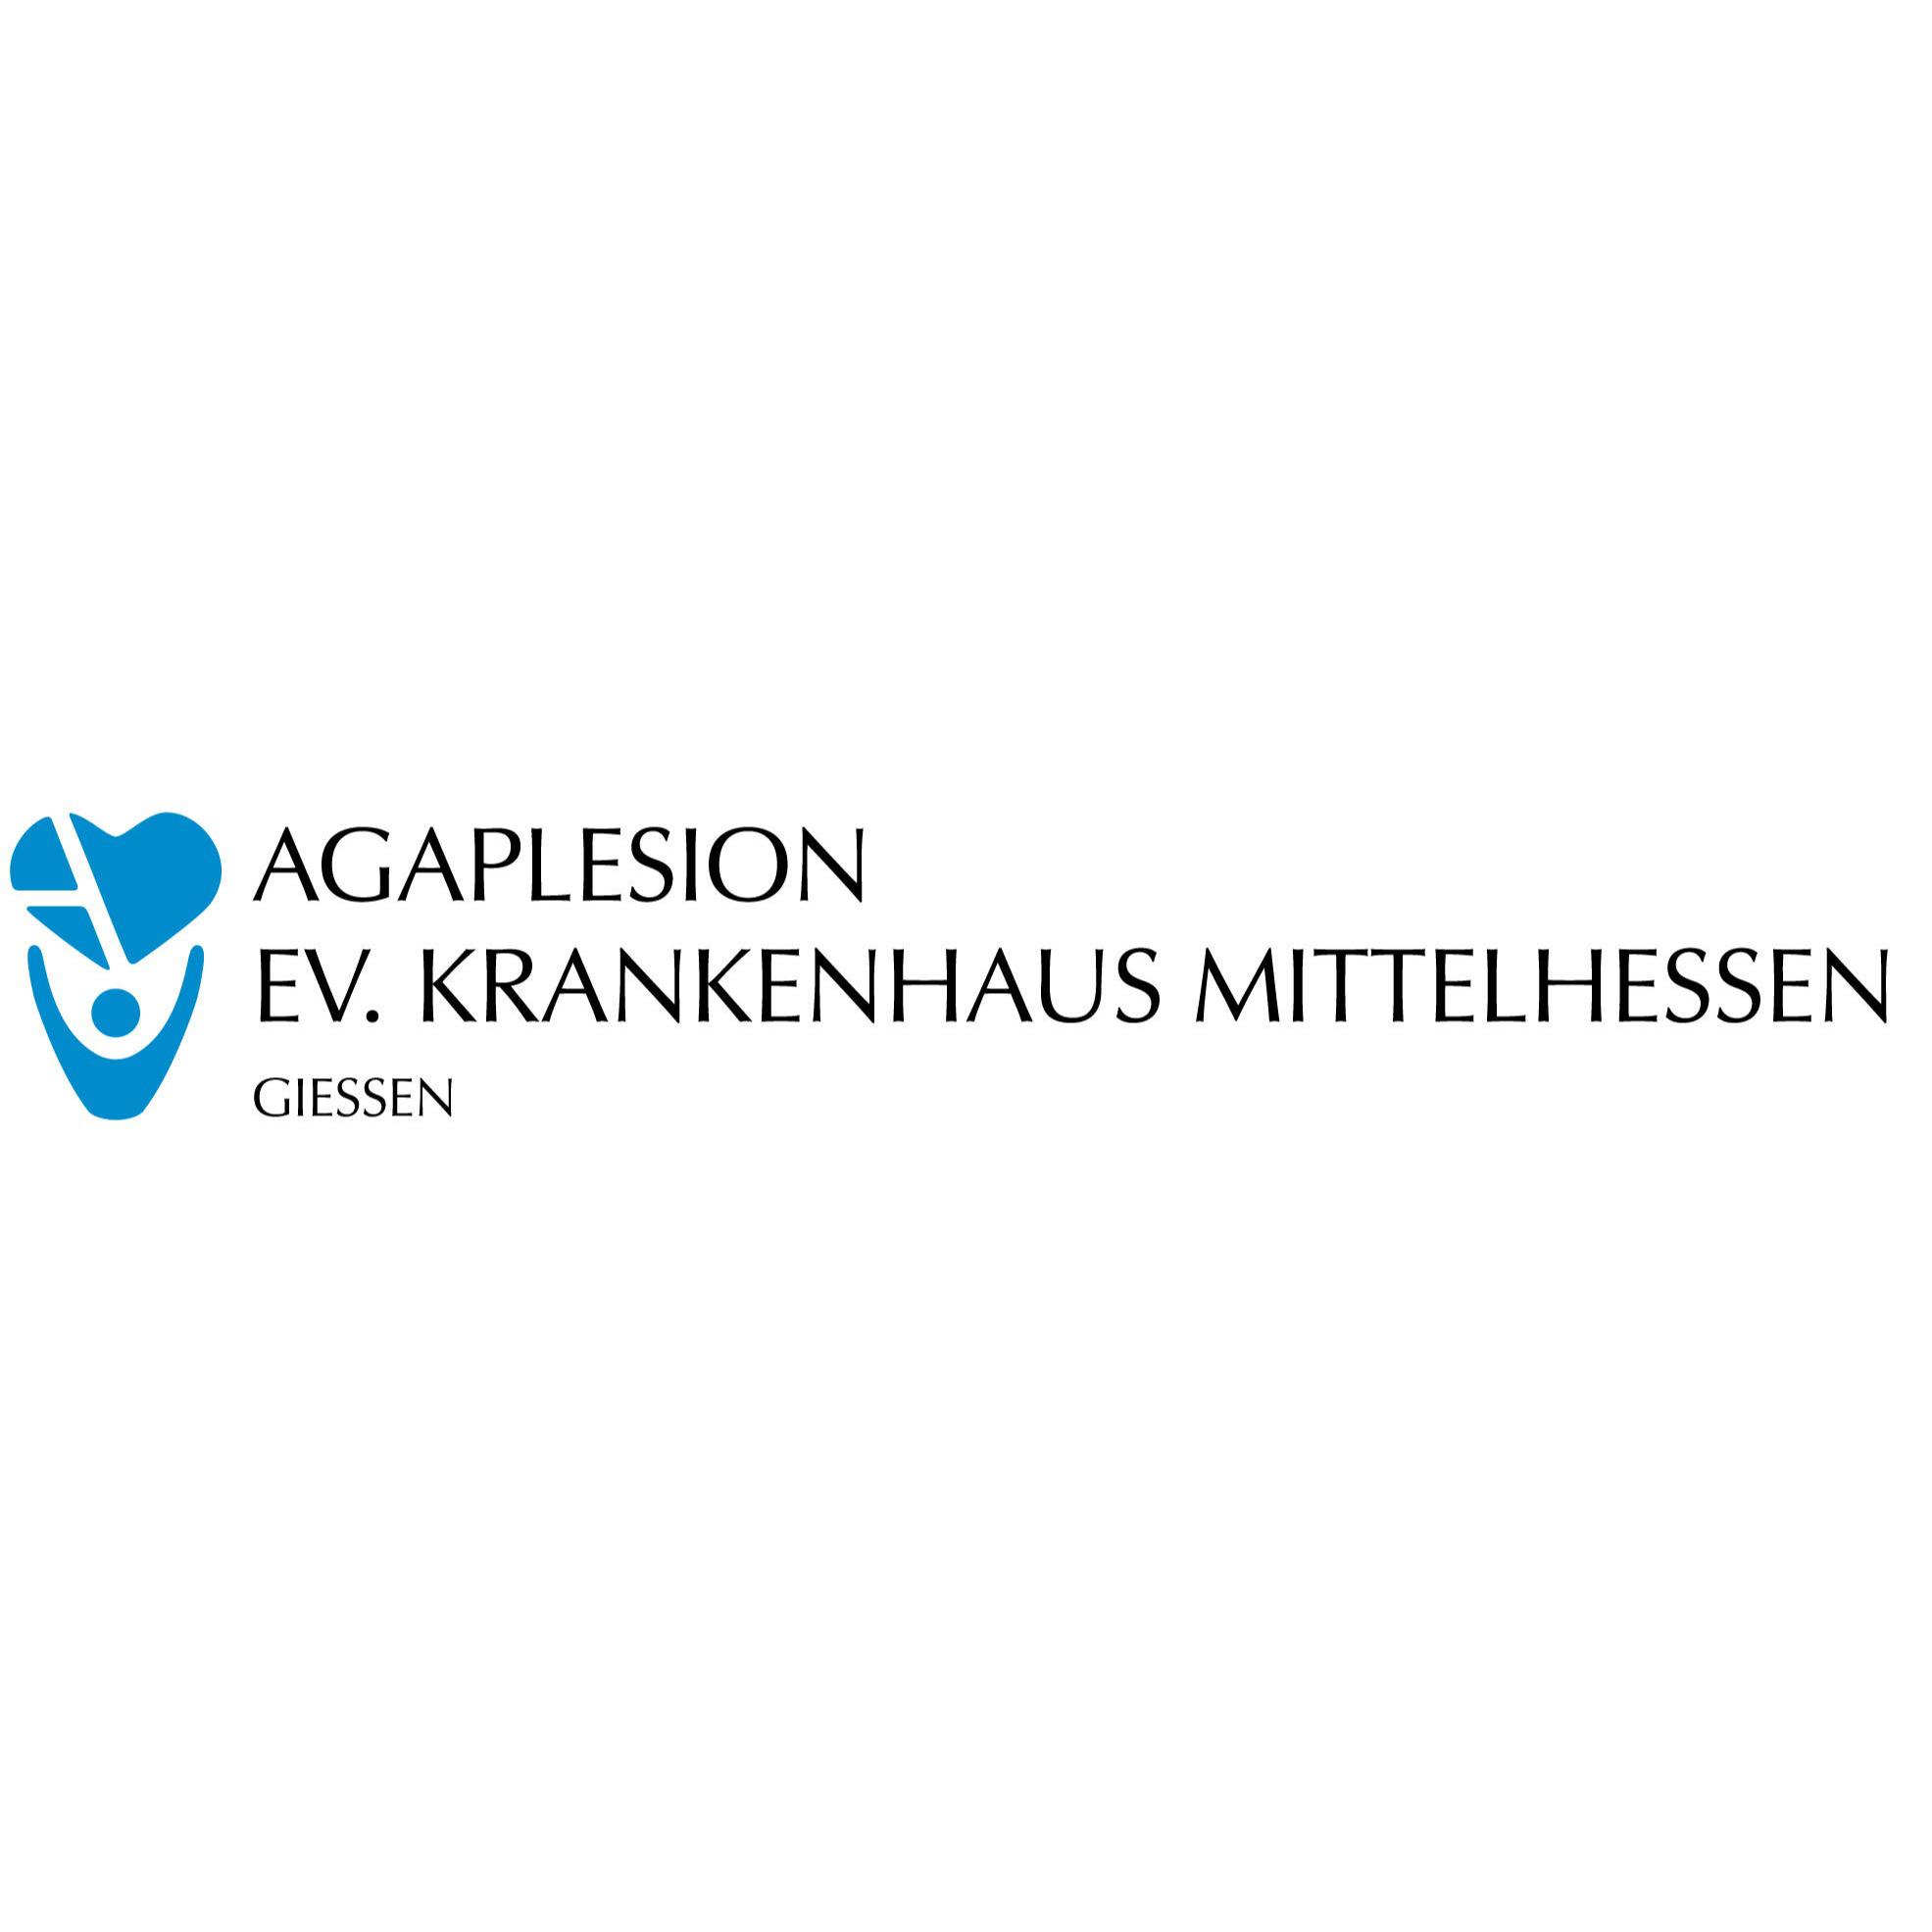 AGAPLESION EV. KRANKENHAUS MITTELHESSEN Logo